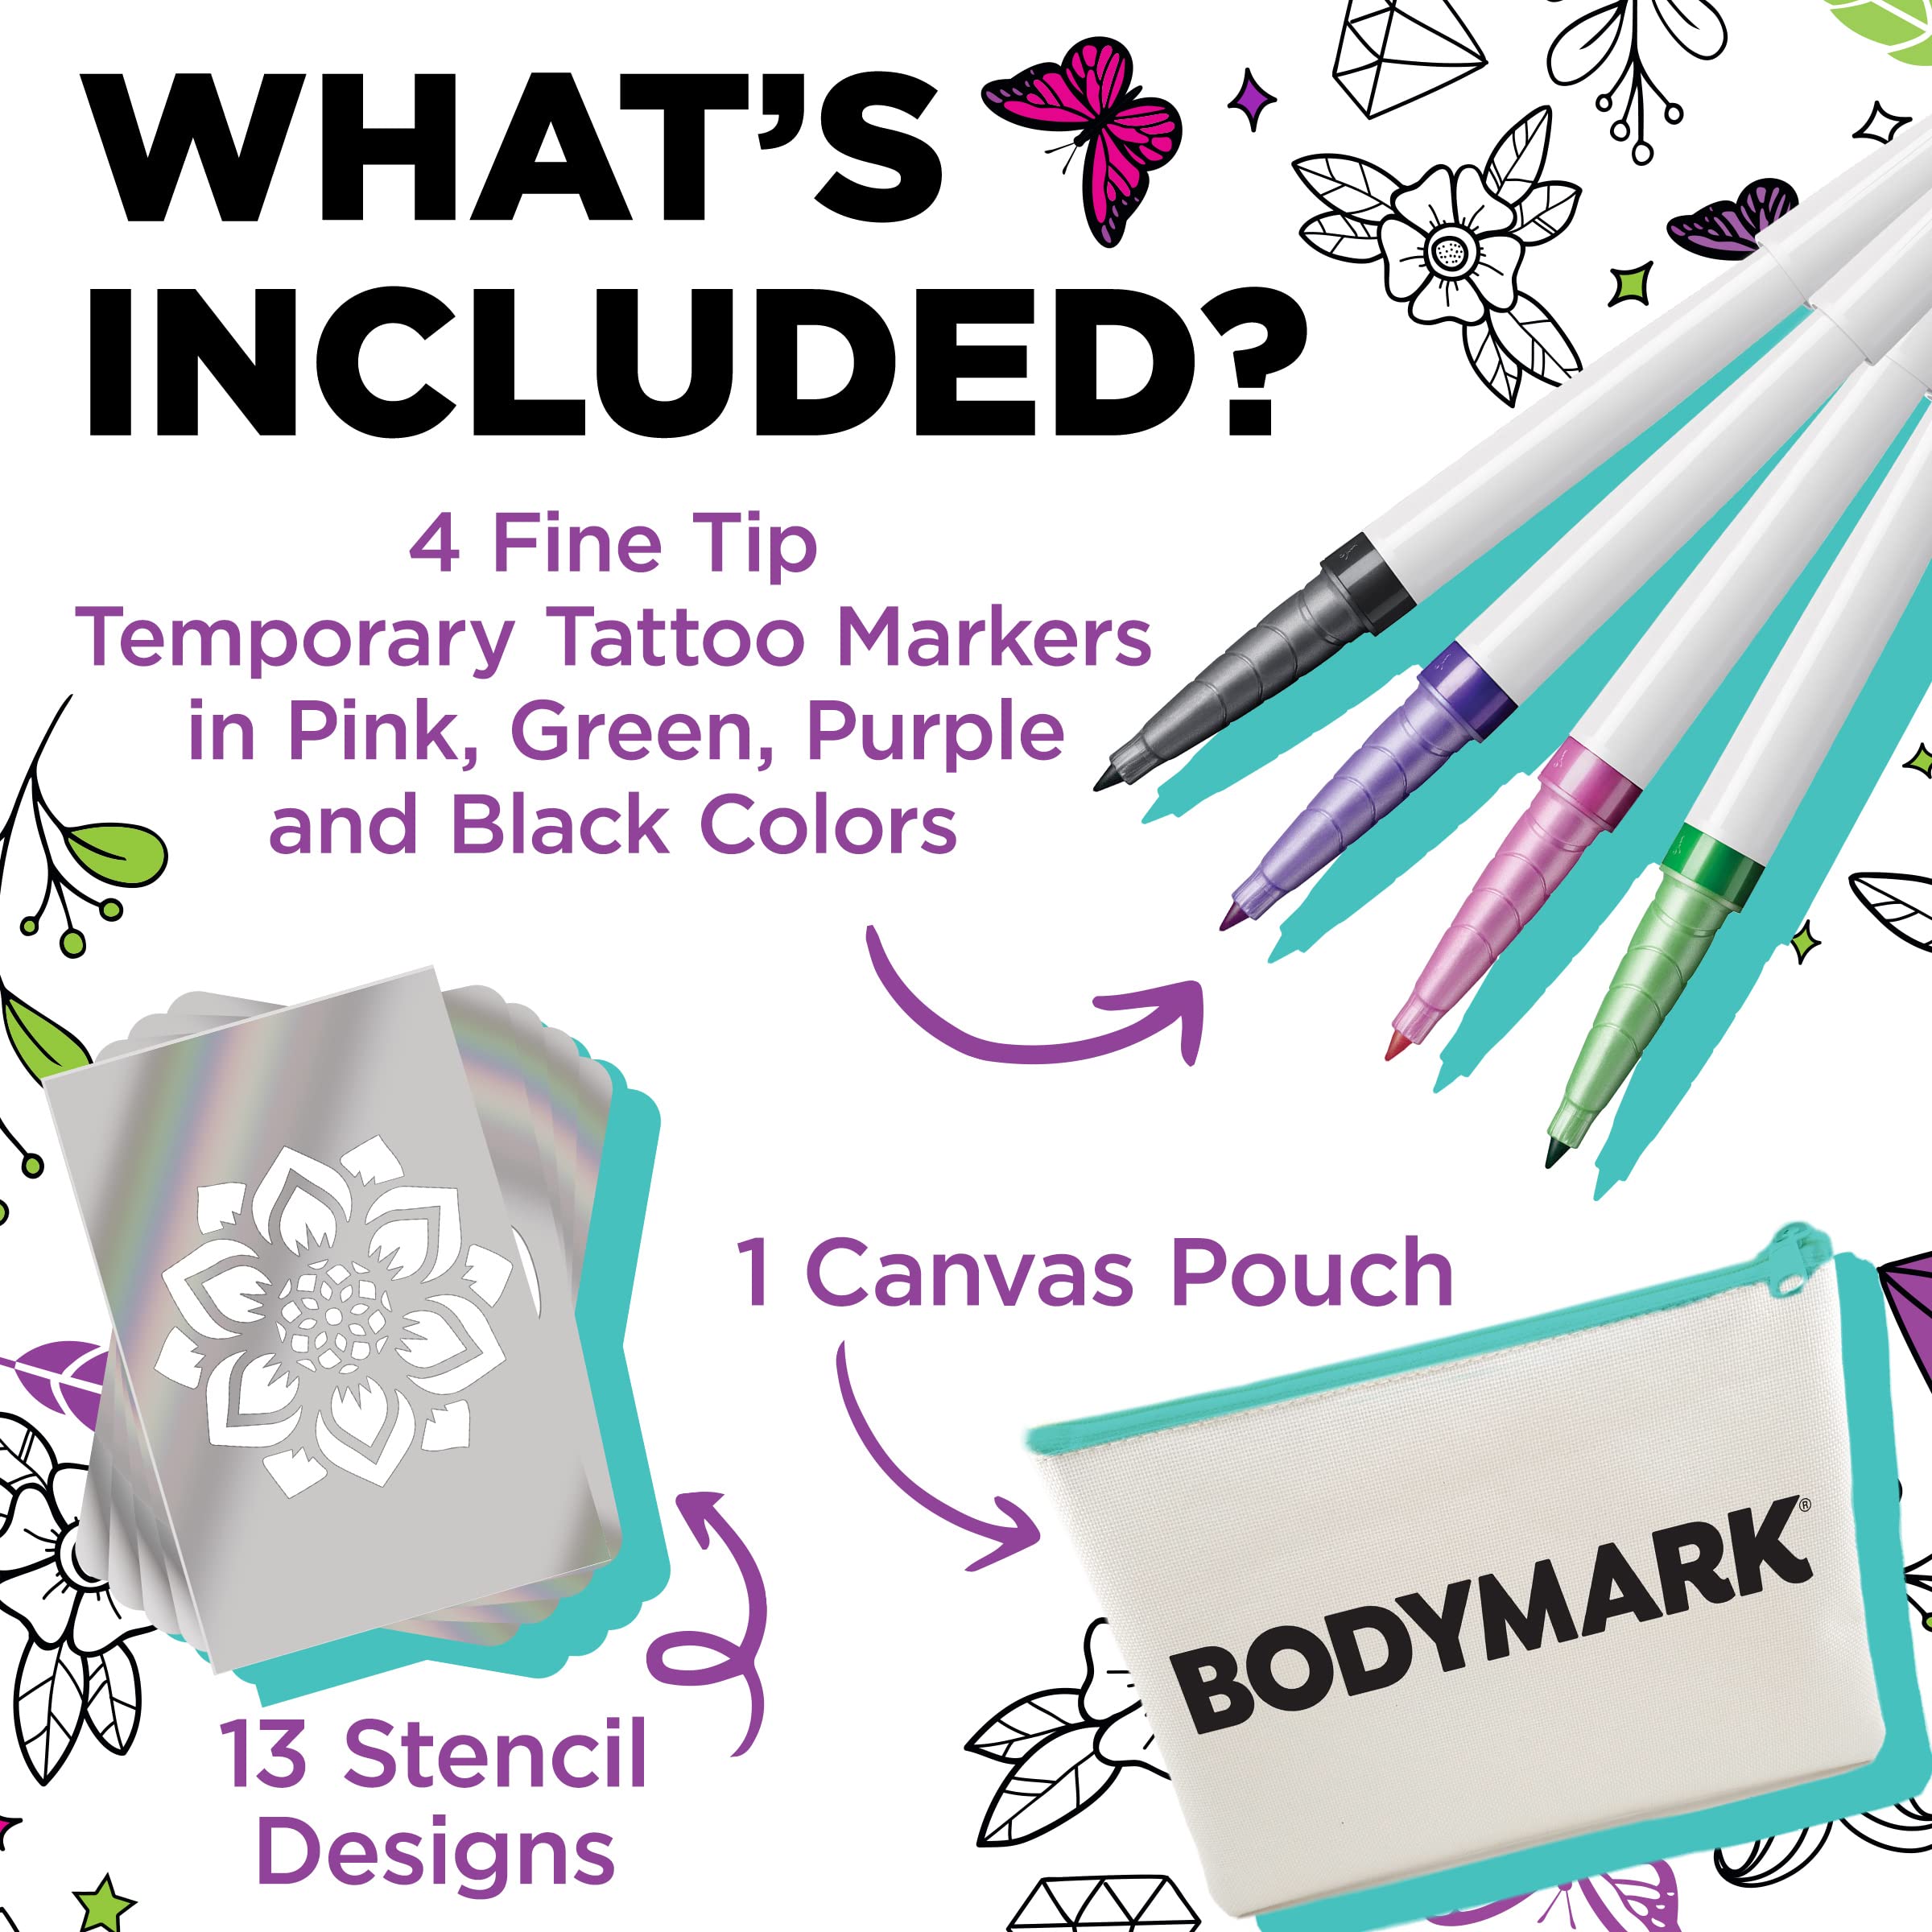 BodyMark Gift Set Temporary Tattoo Marker for Skin, Premium Brush Tip, 4 Count Pack of Assorted Colors and Stencils, Skin-Safe Temporary Tattoo Markers Set